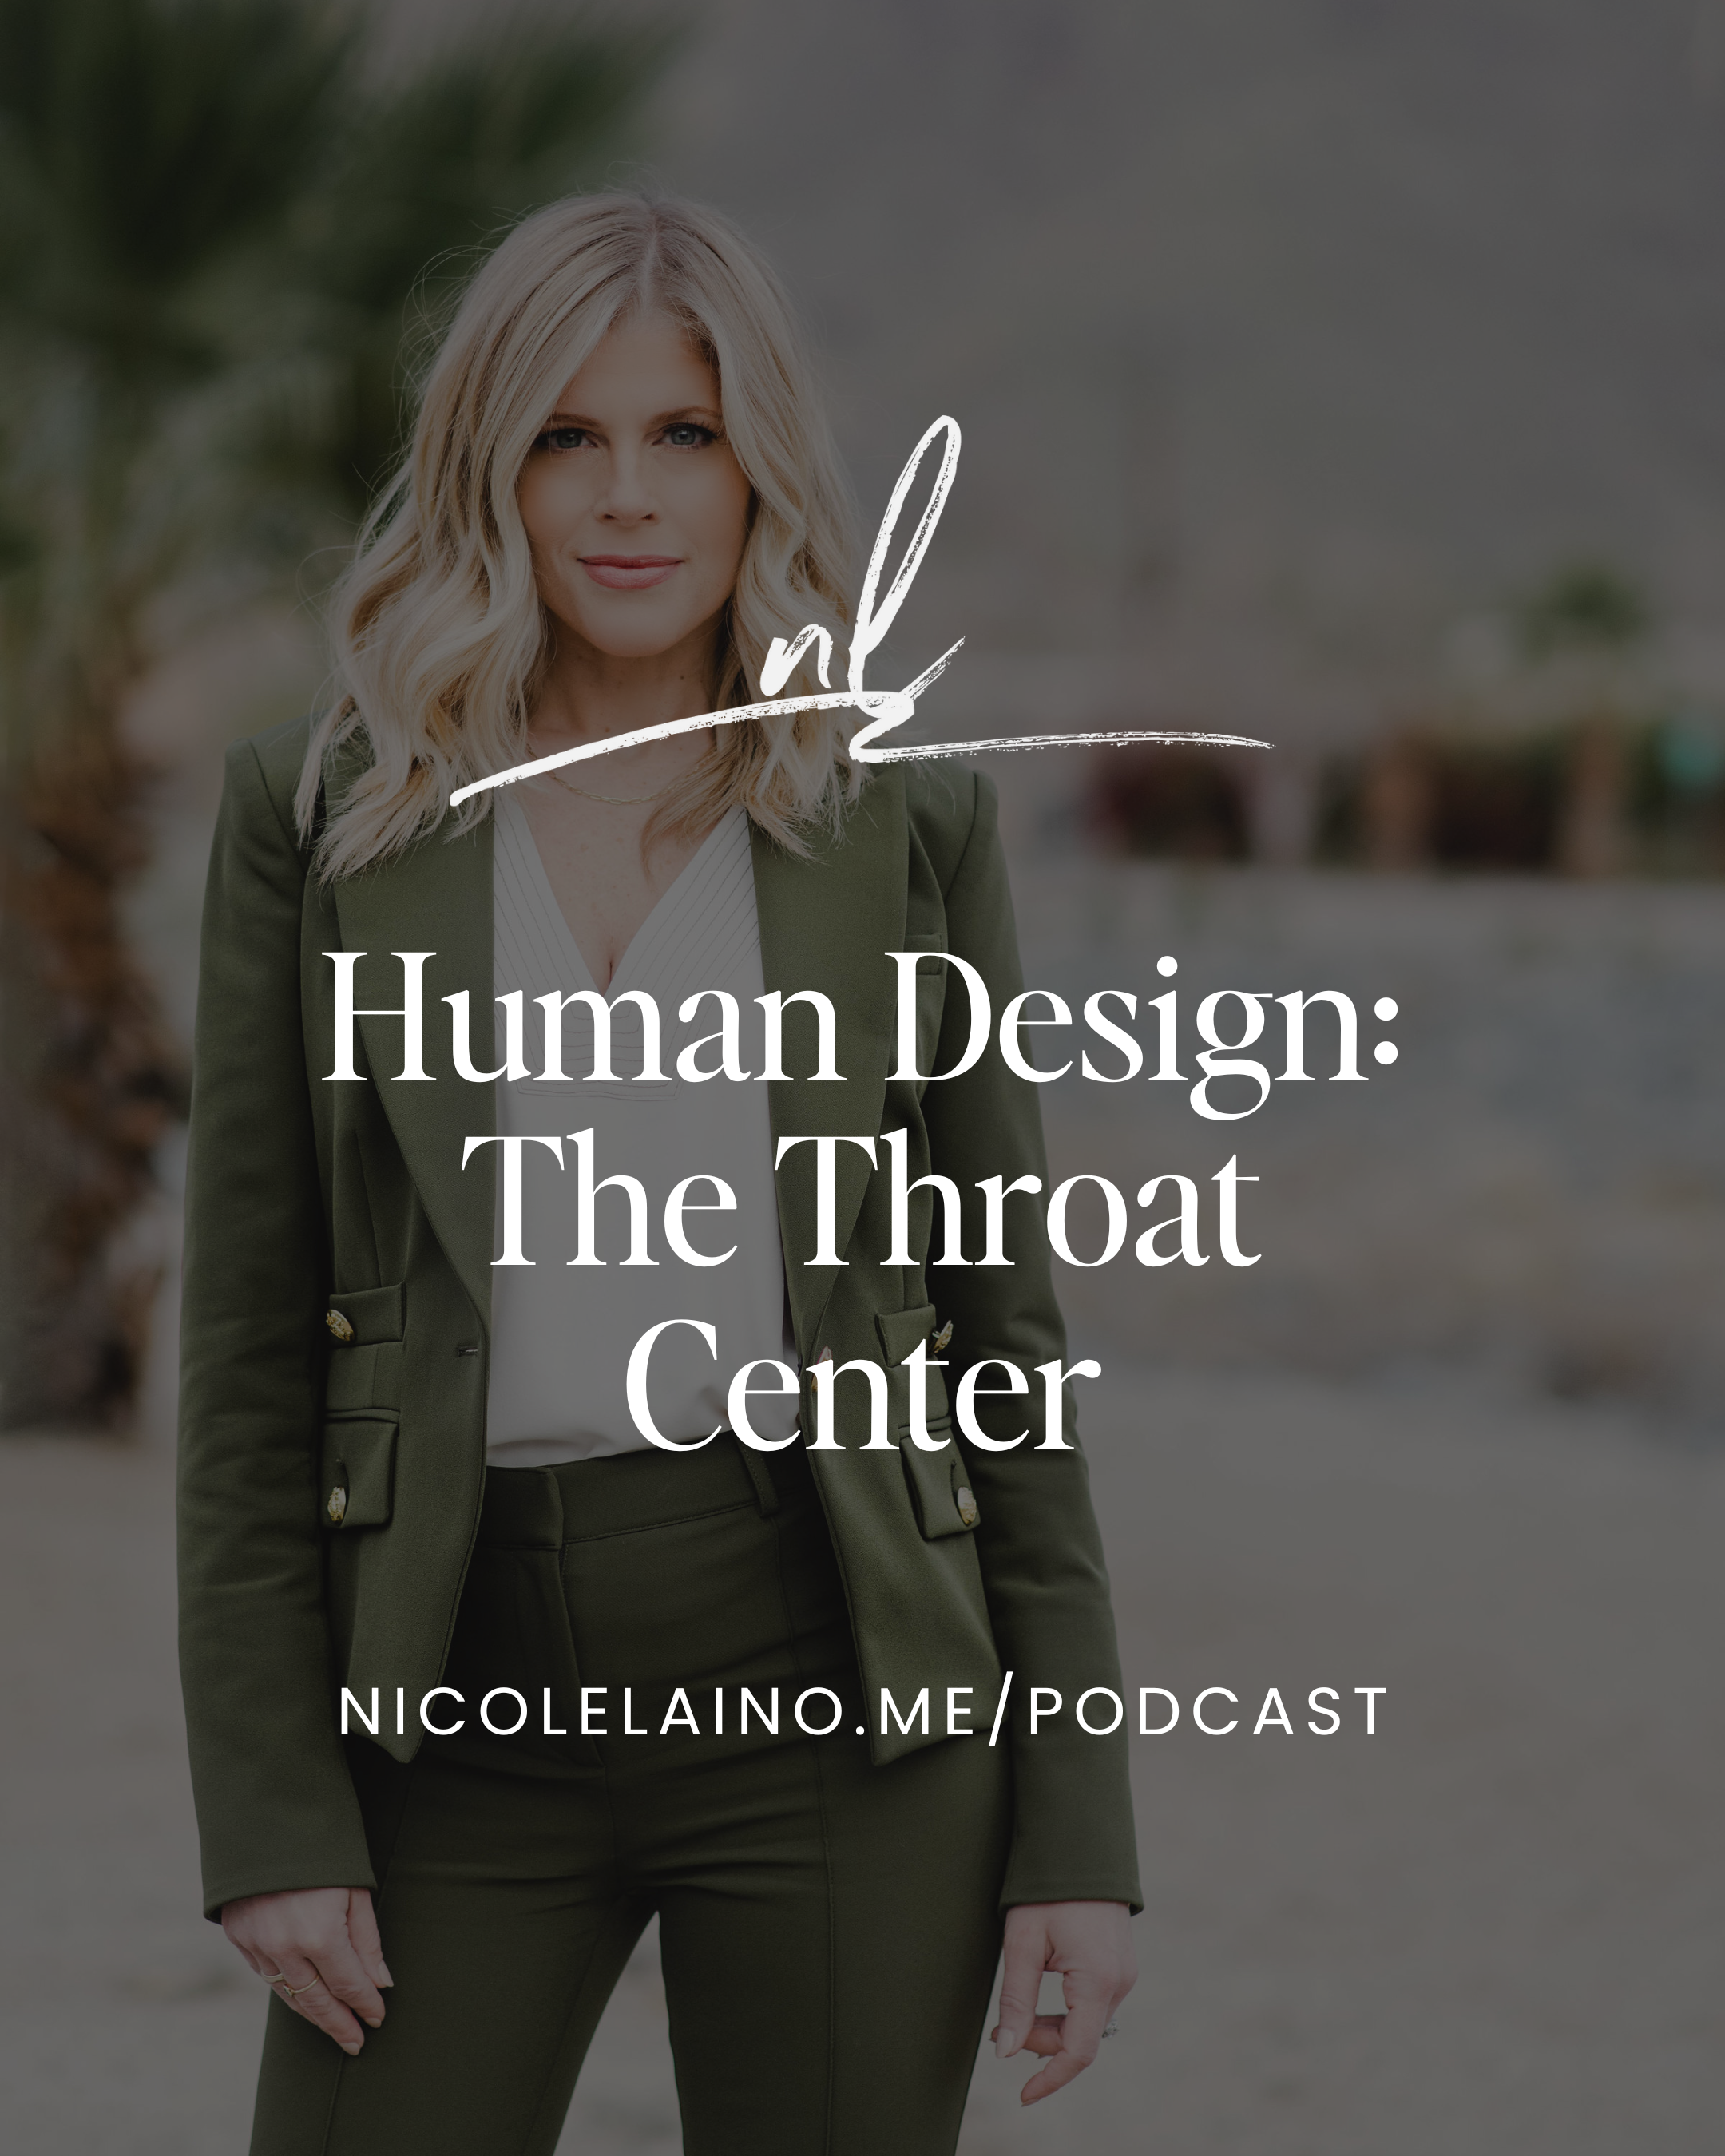 Human Design: The Throat Center